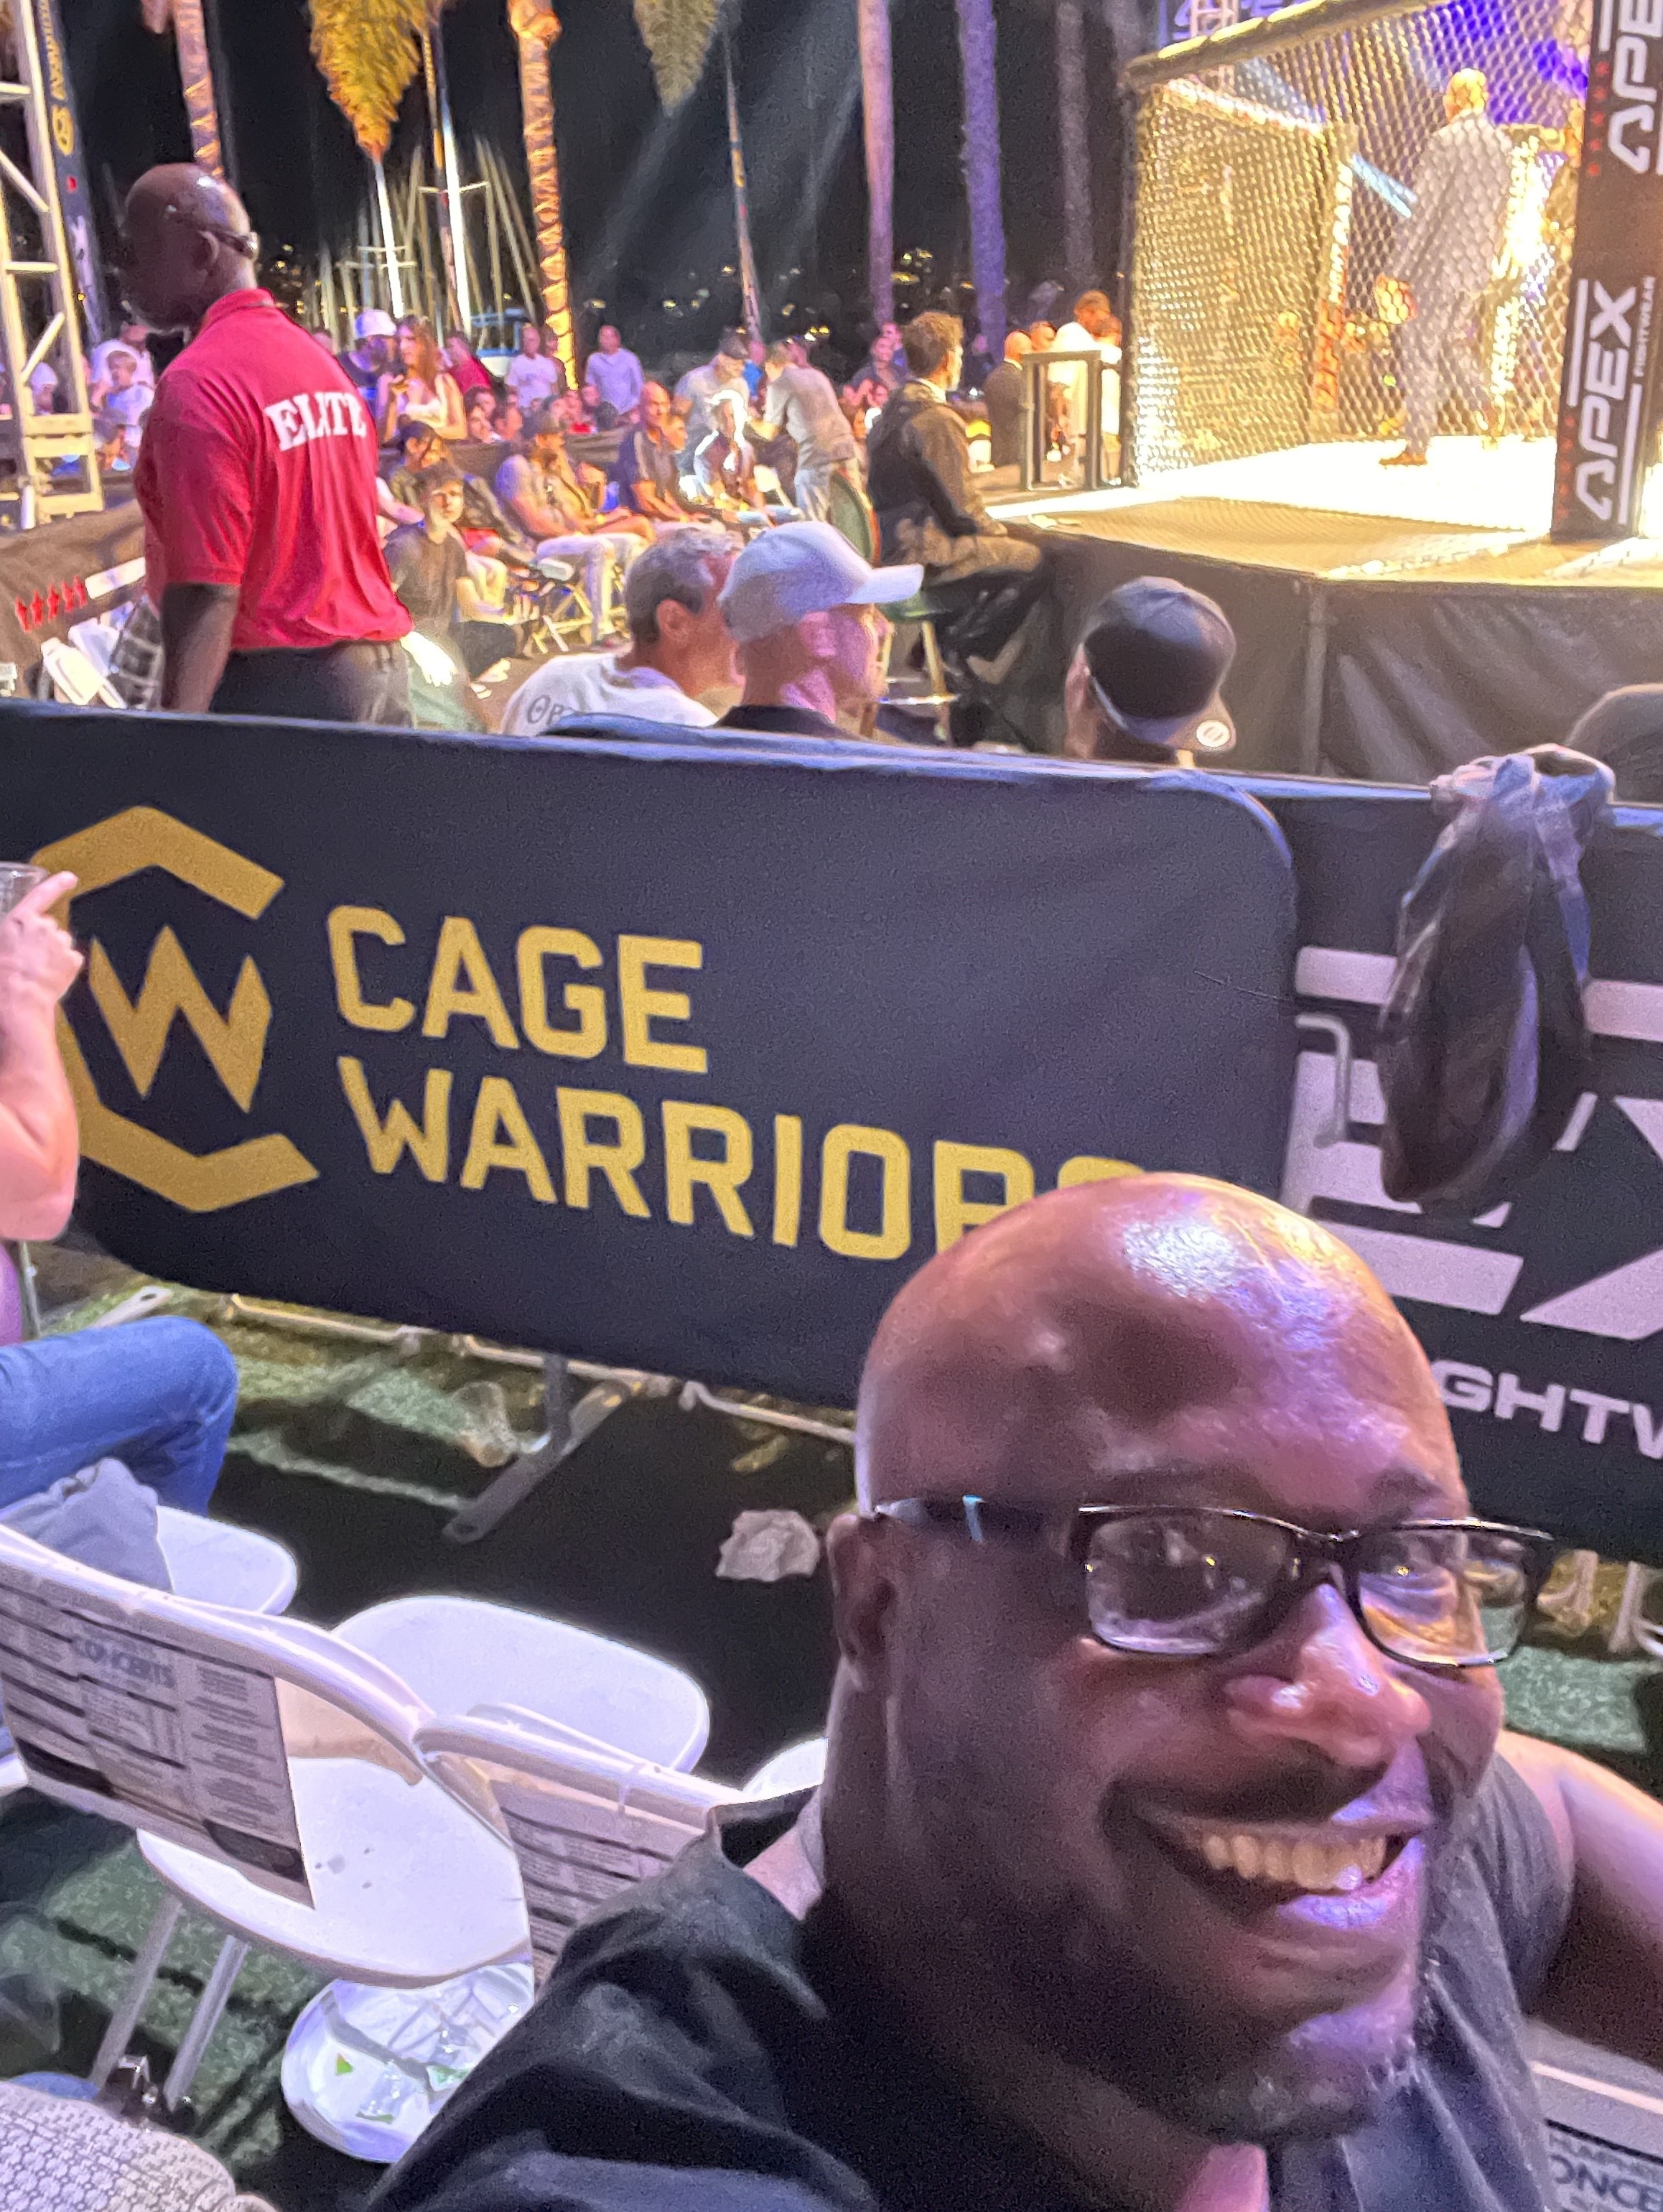 Cage Warriors 143